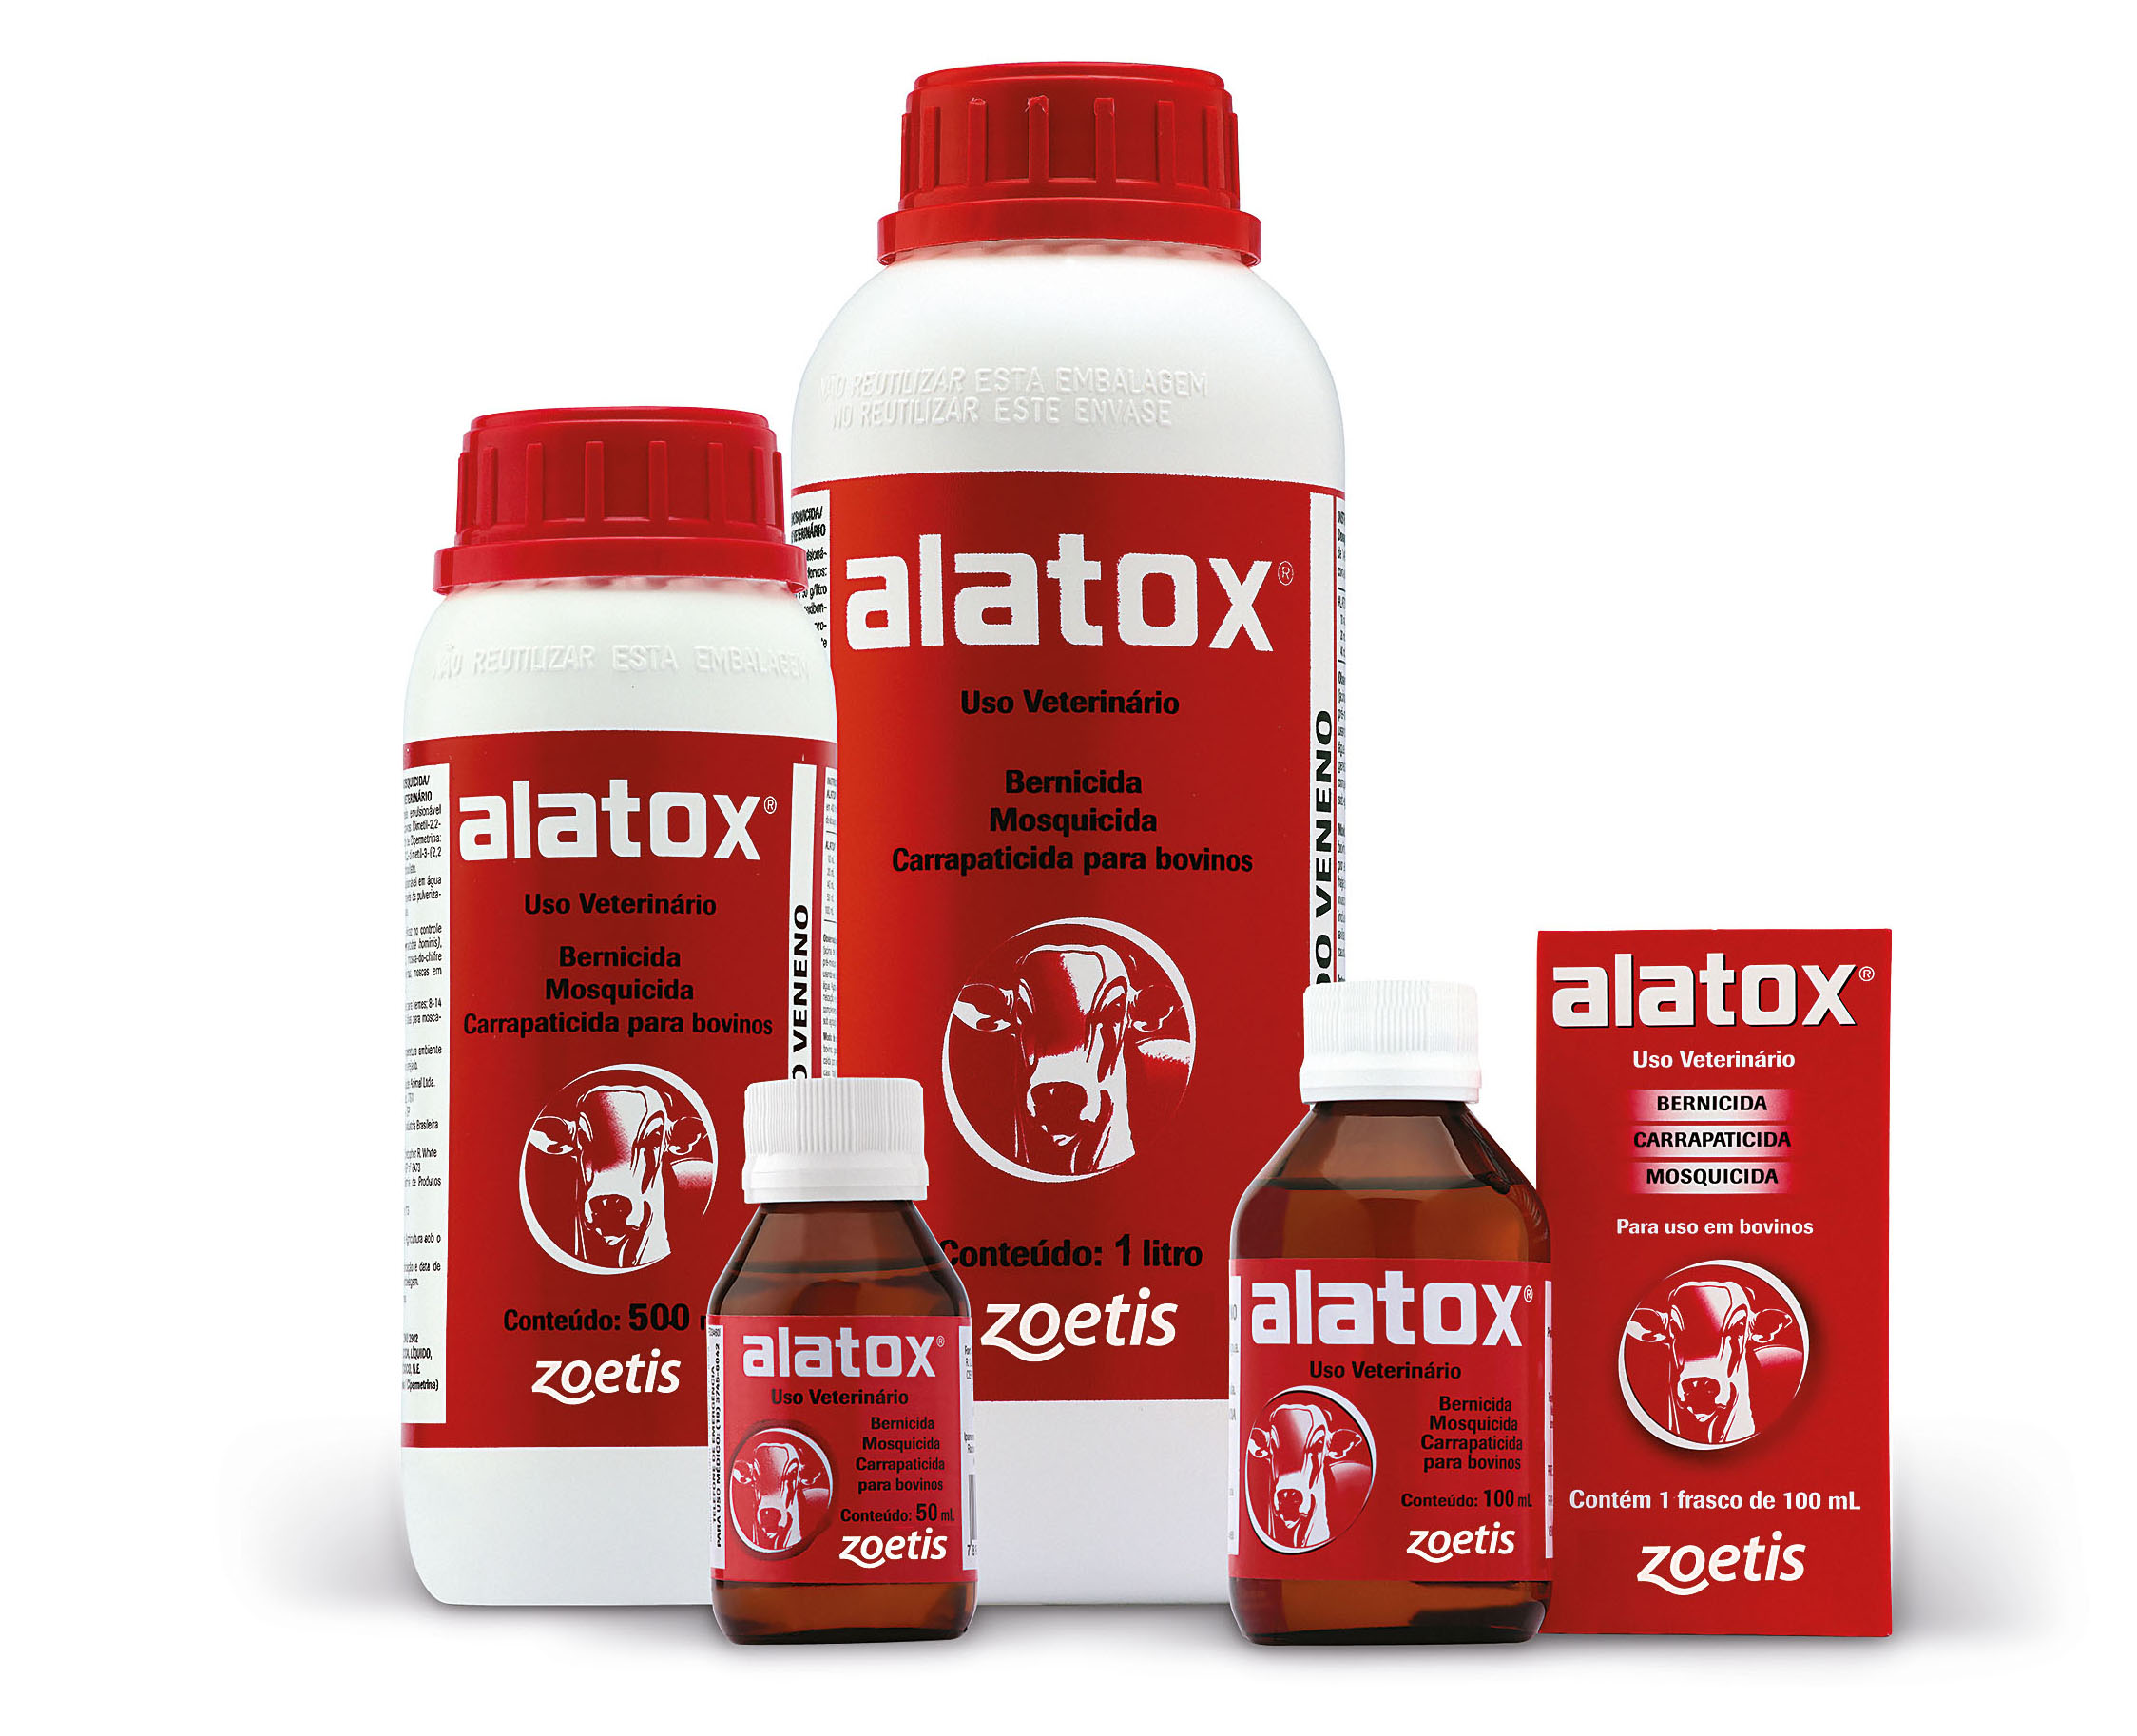 Alatox Product